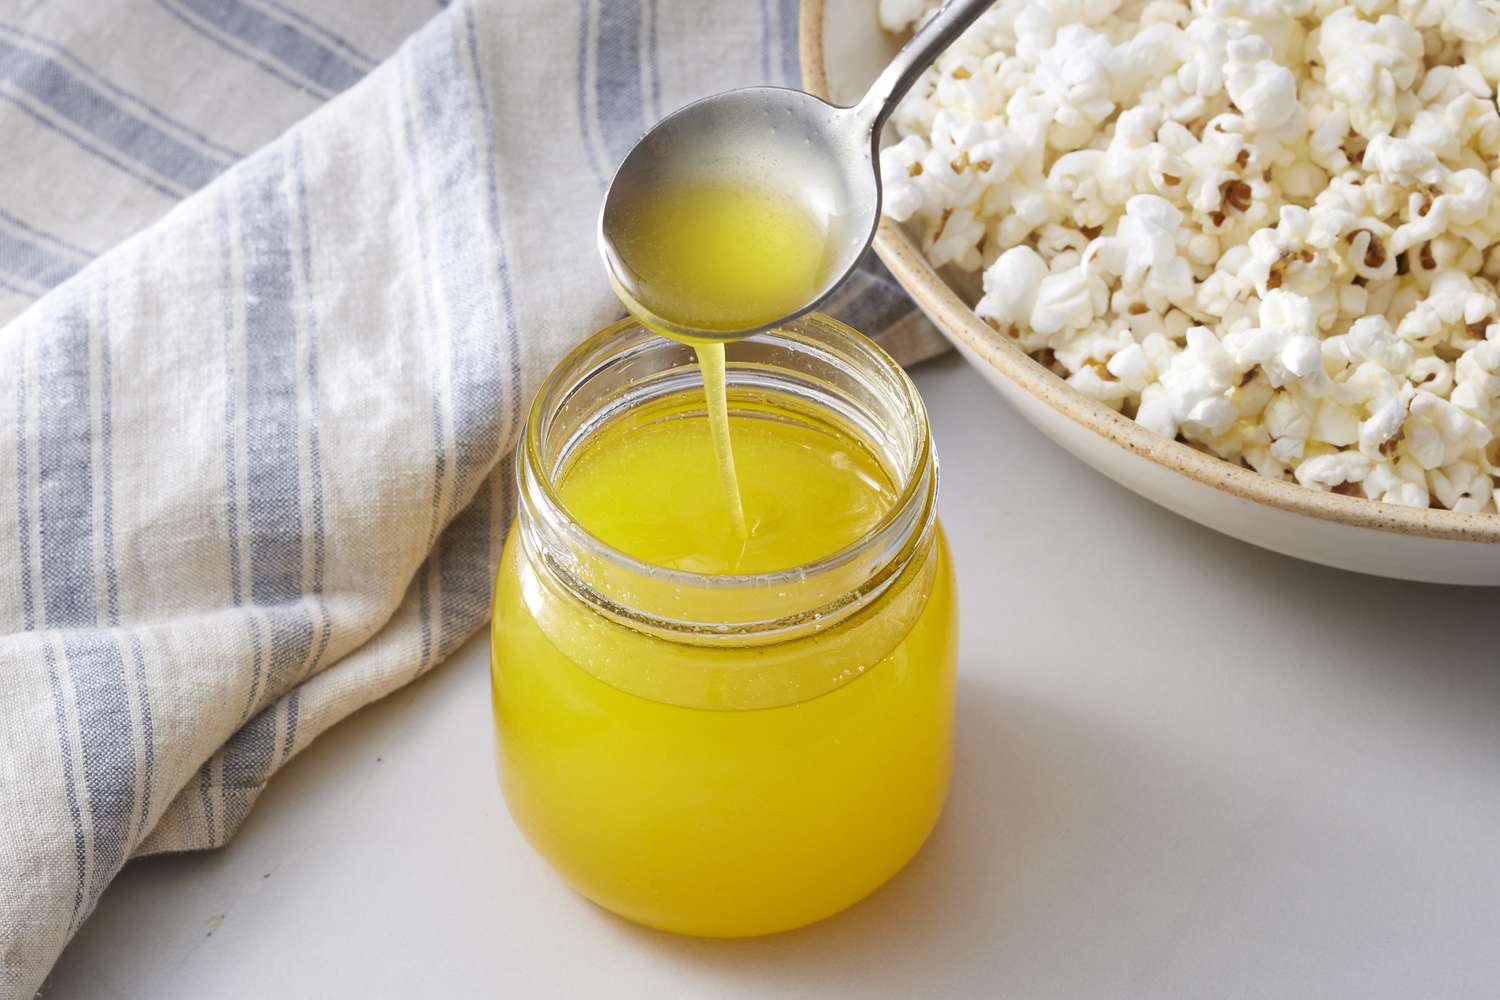 sesame oil substitute - clarified butter